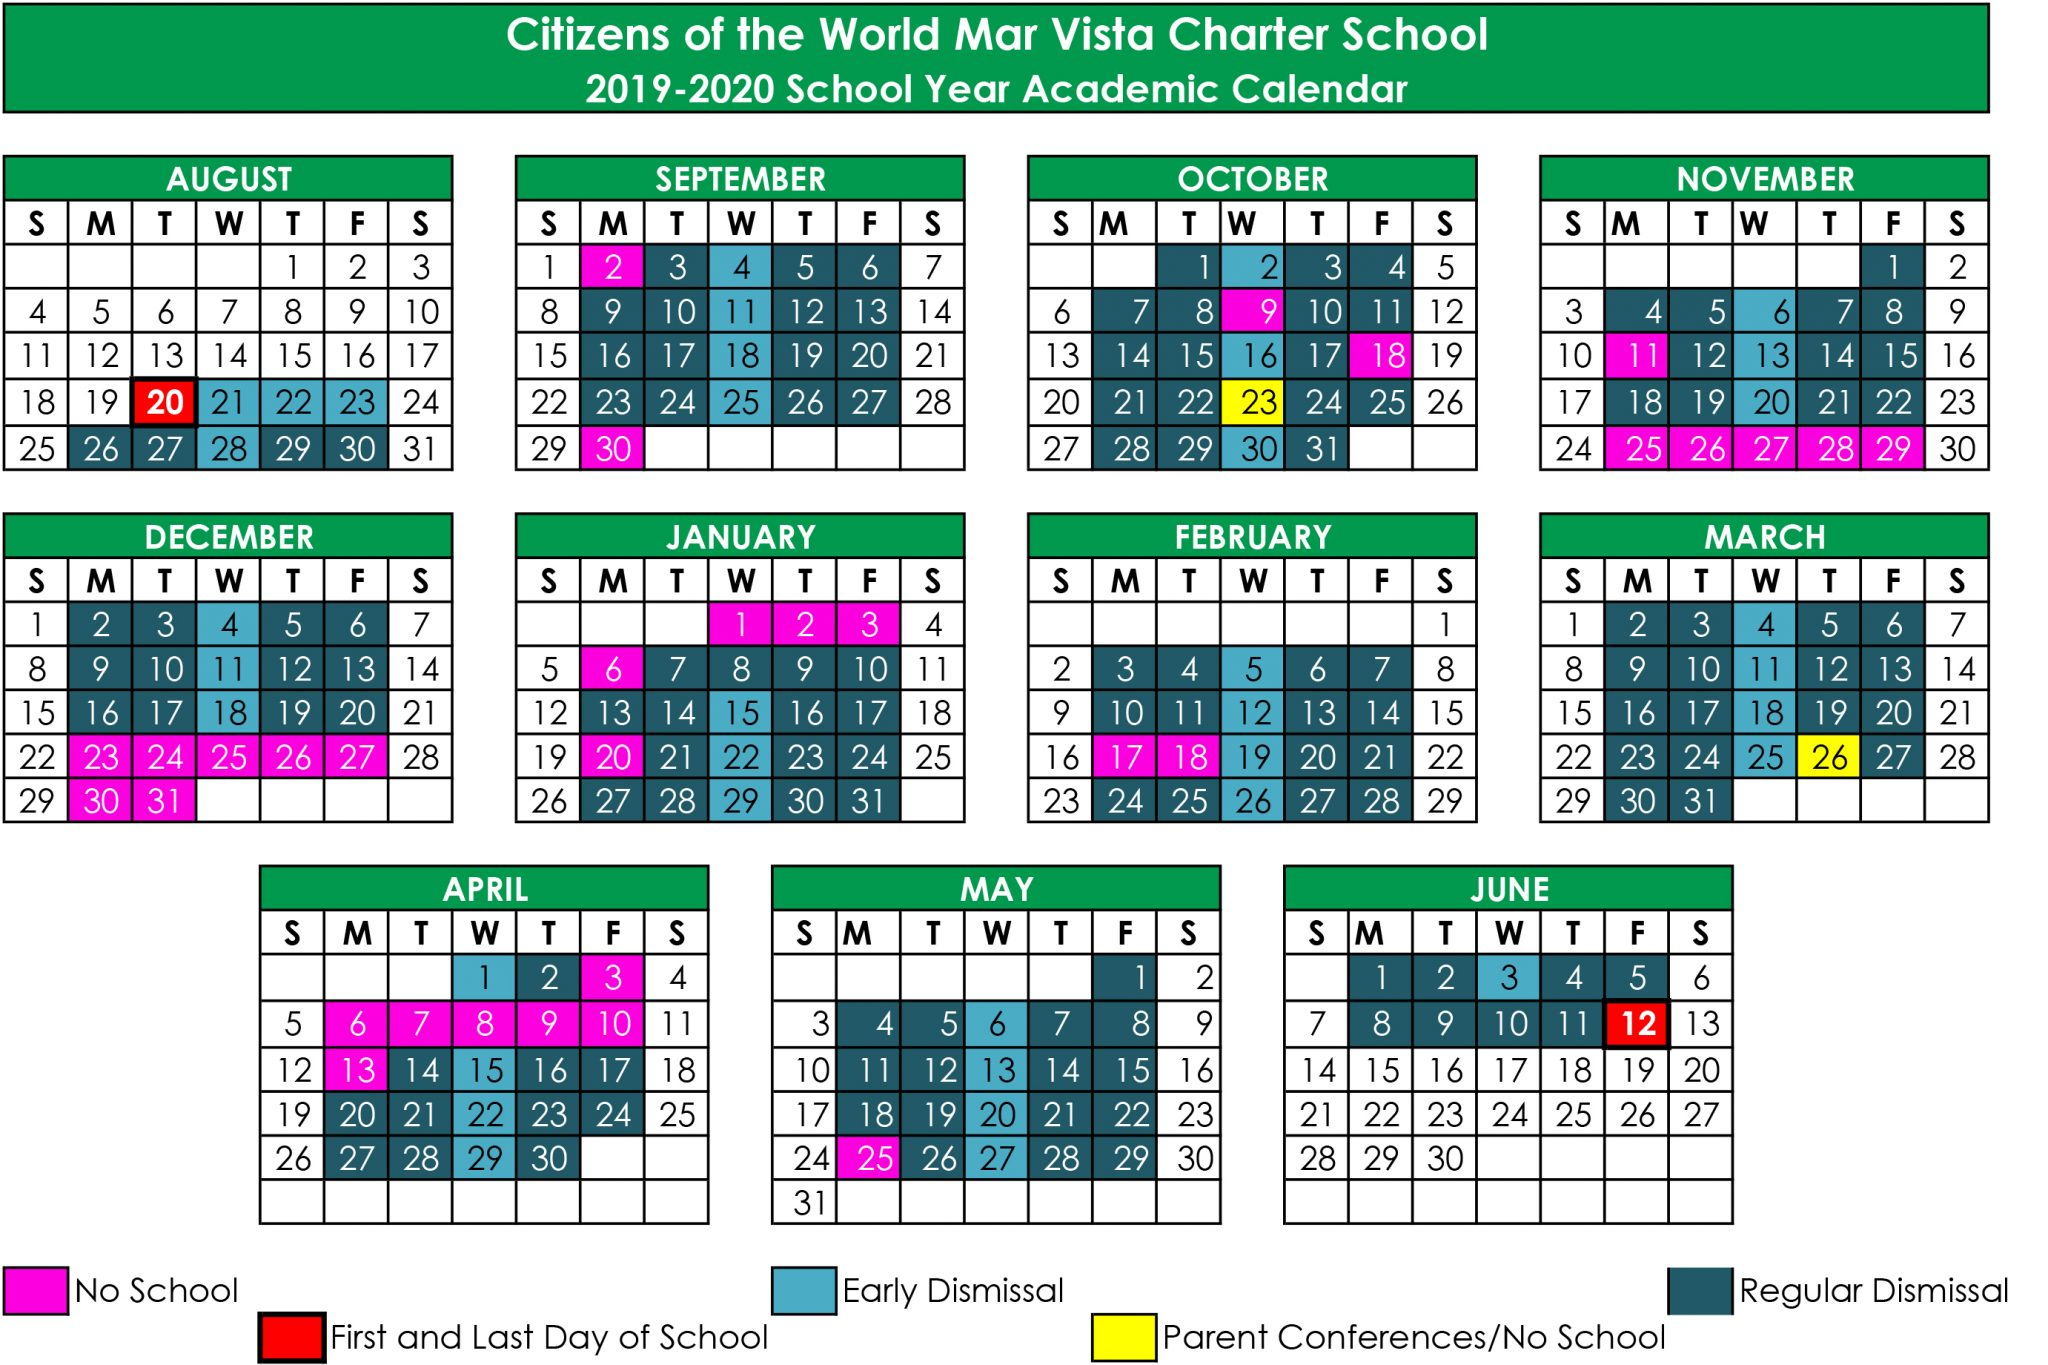 School Calendar | Cwc Mar Vista